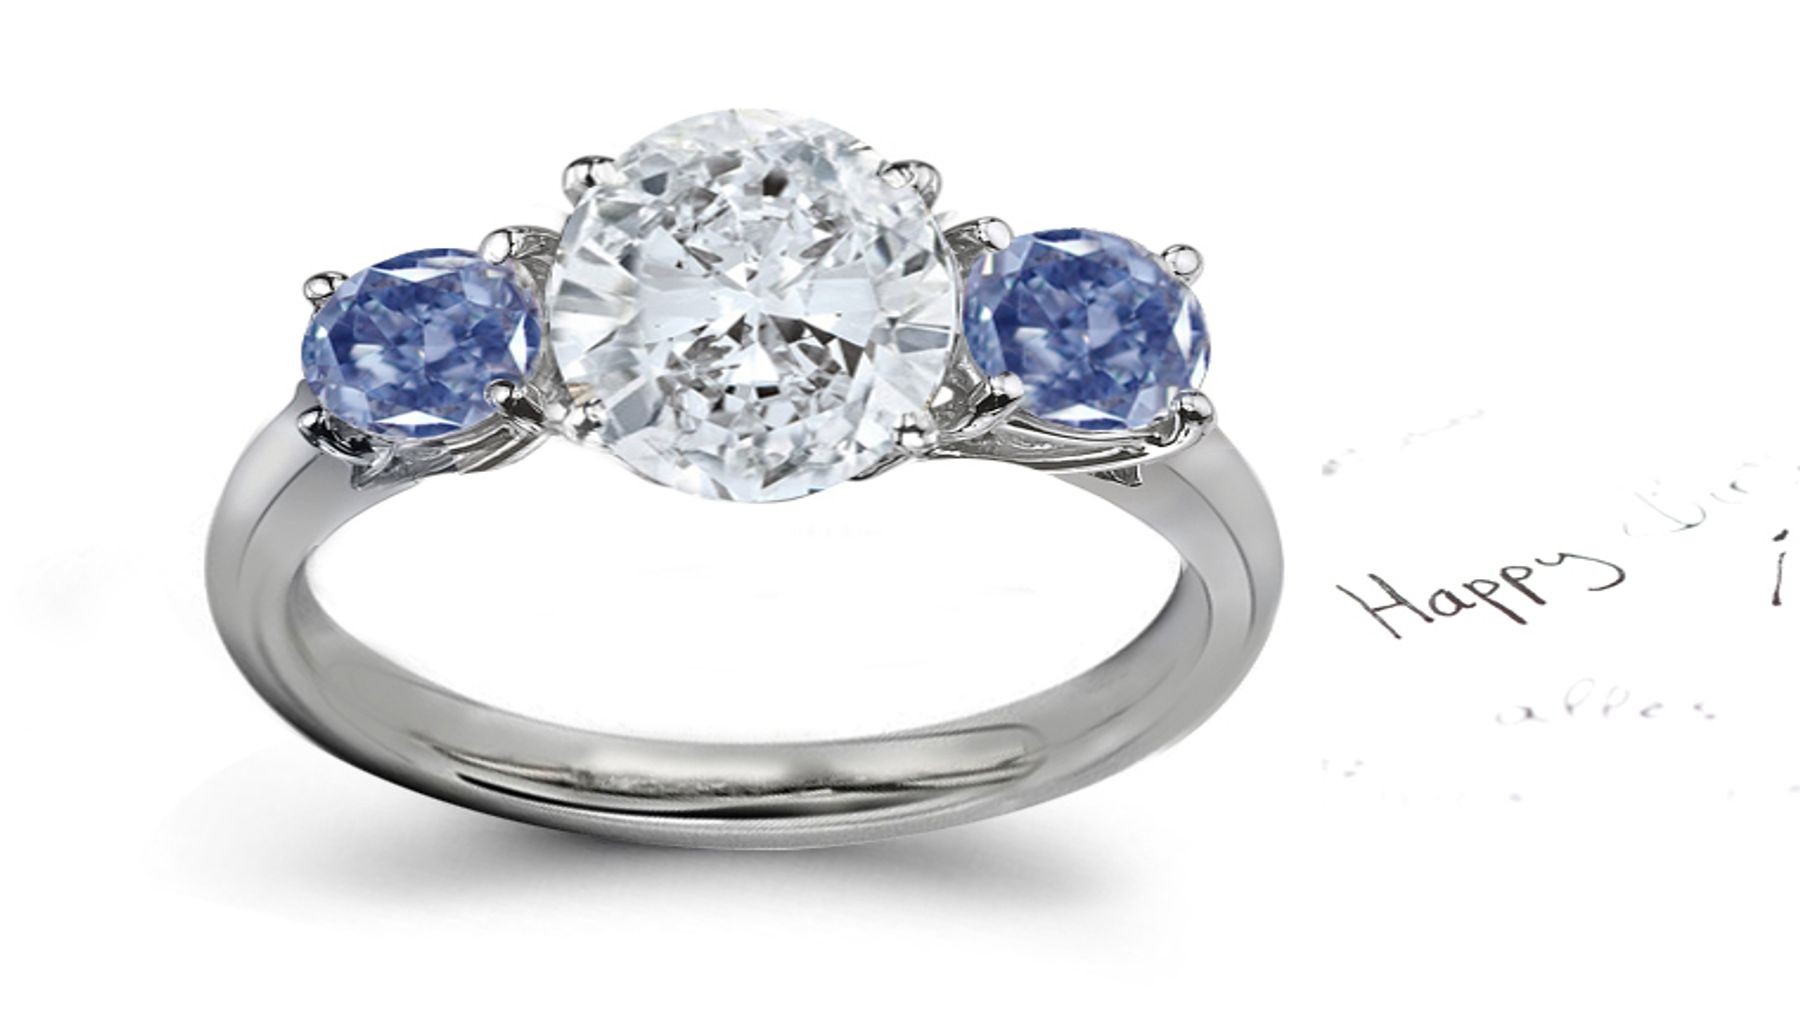 Premier Colored Diamonds Designer Collection - Blue Colored Diamonds & White Diamonds Fancy Blue Diamond Engagement Rings